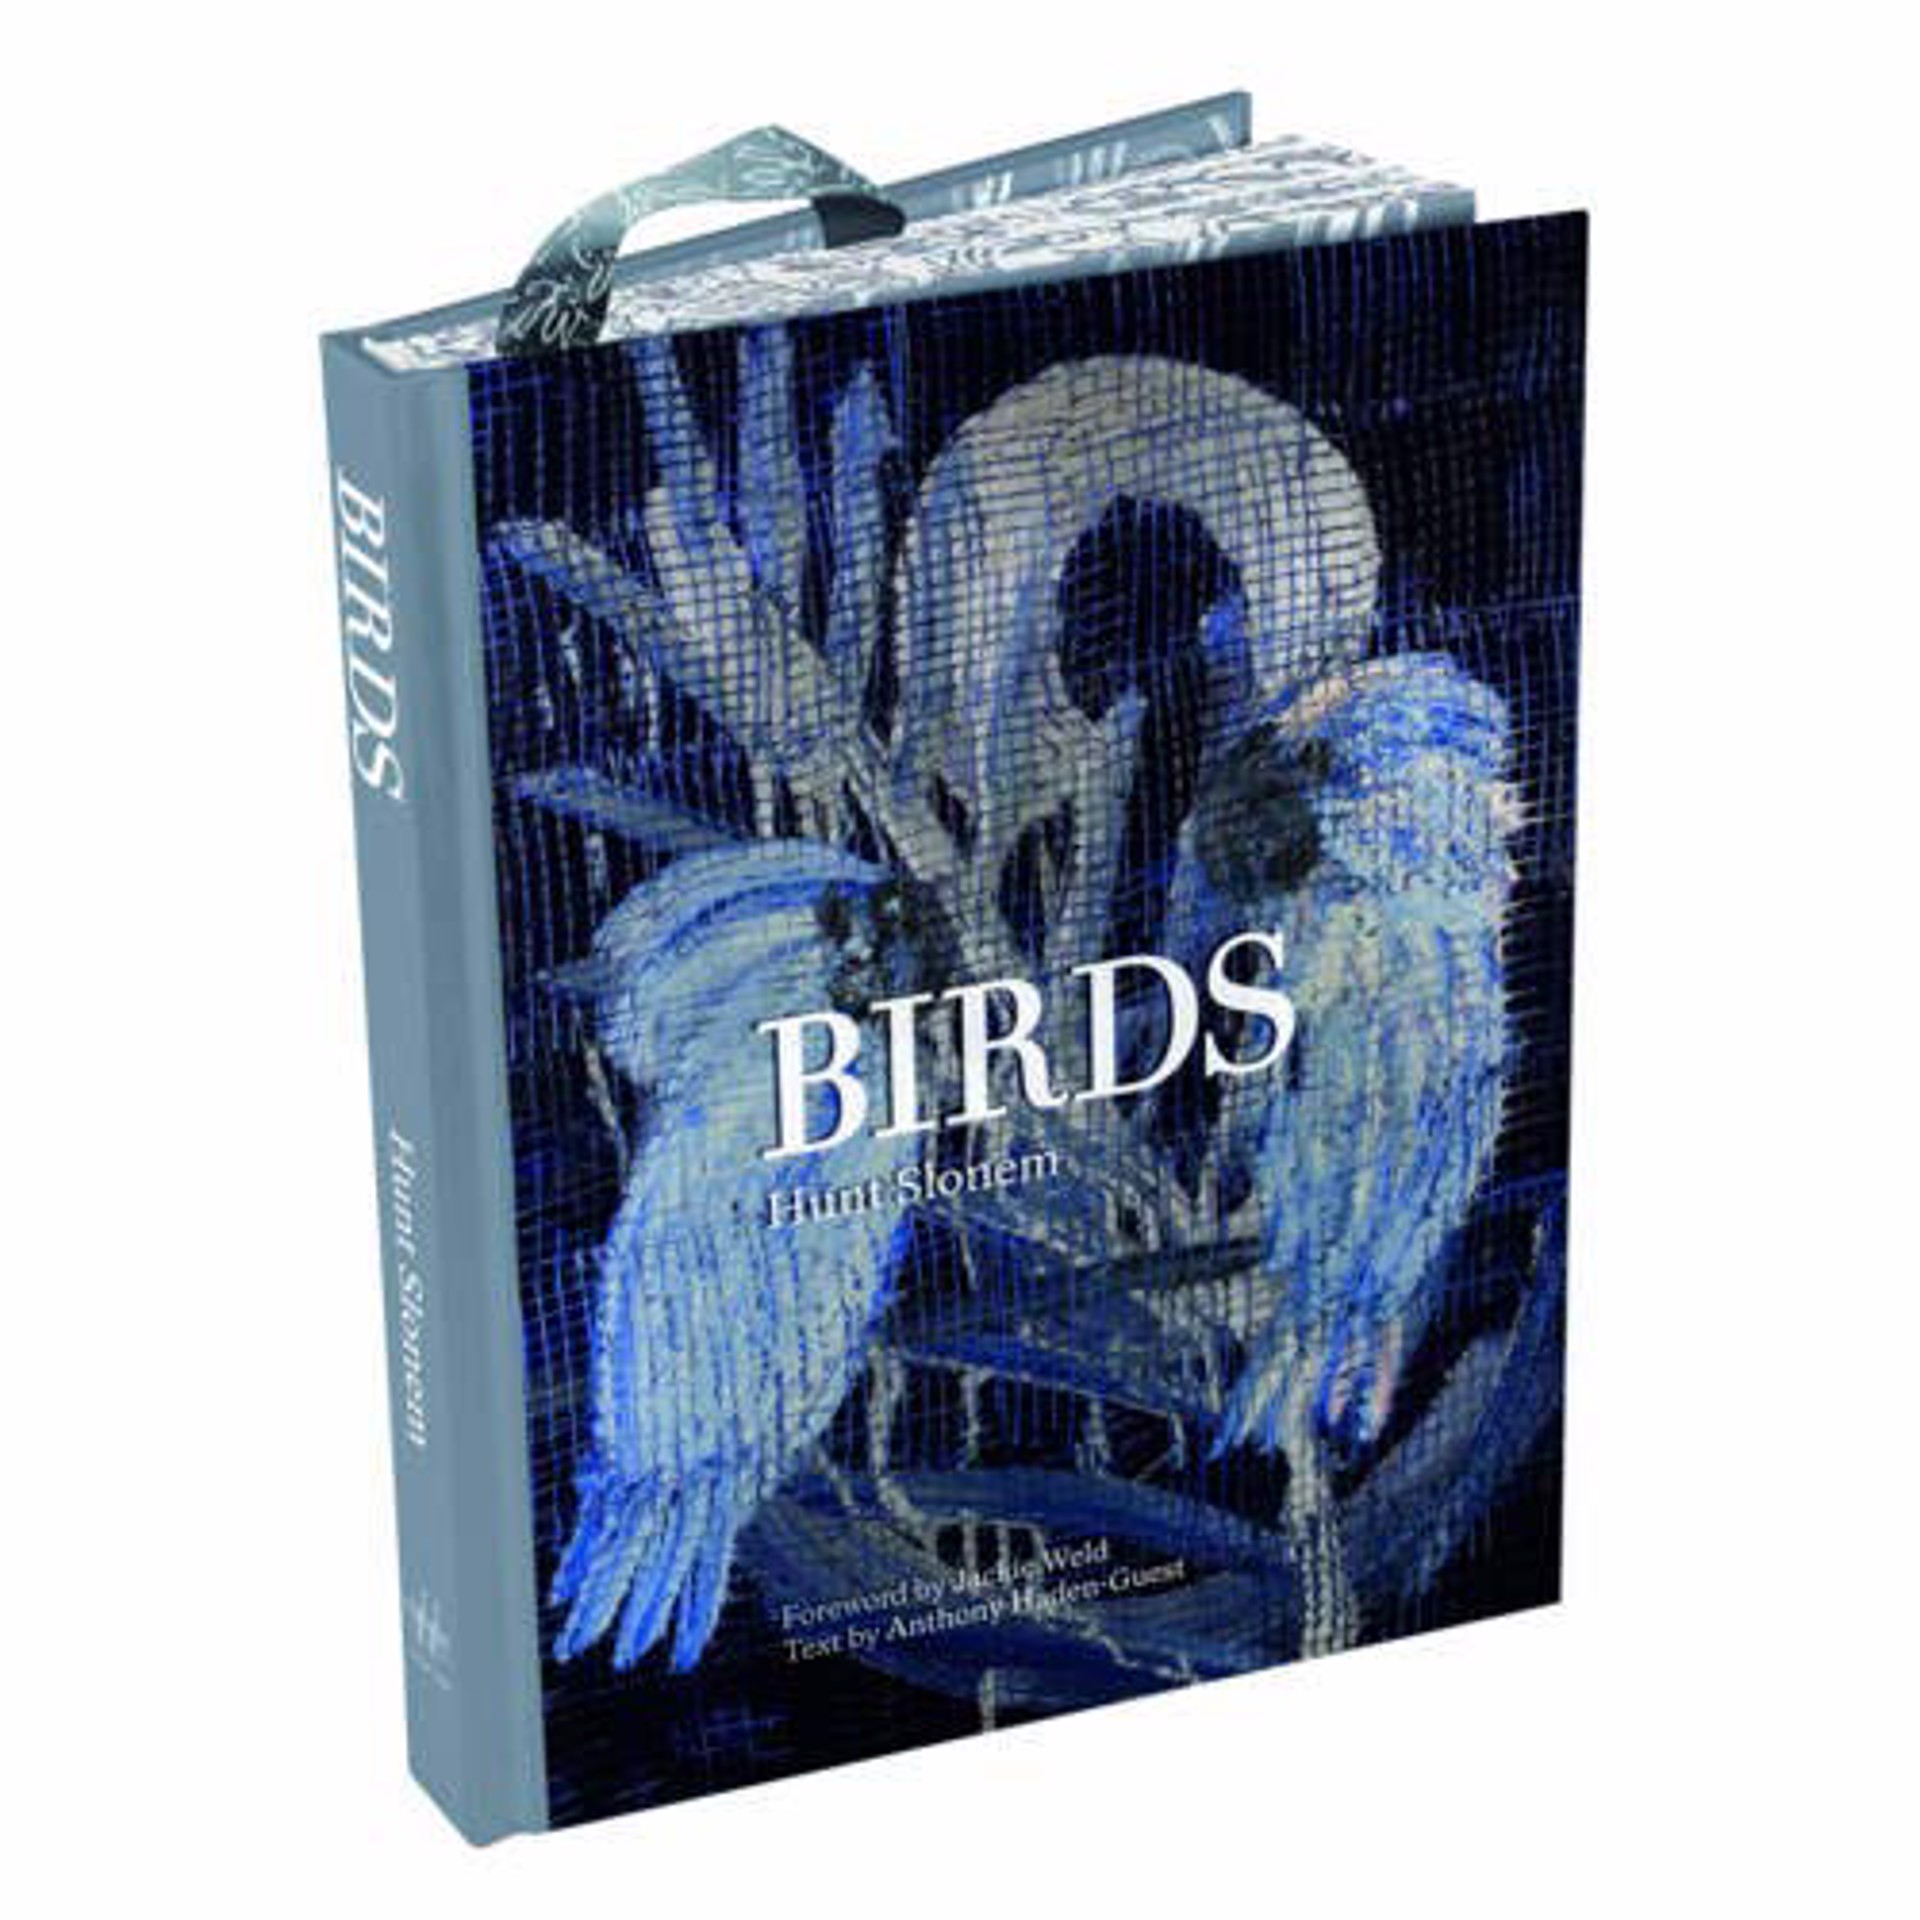 Birds Book by Hunt Slonem